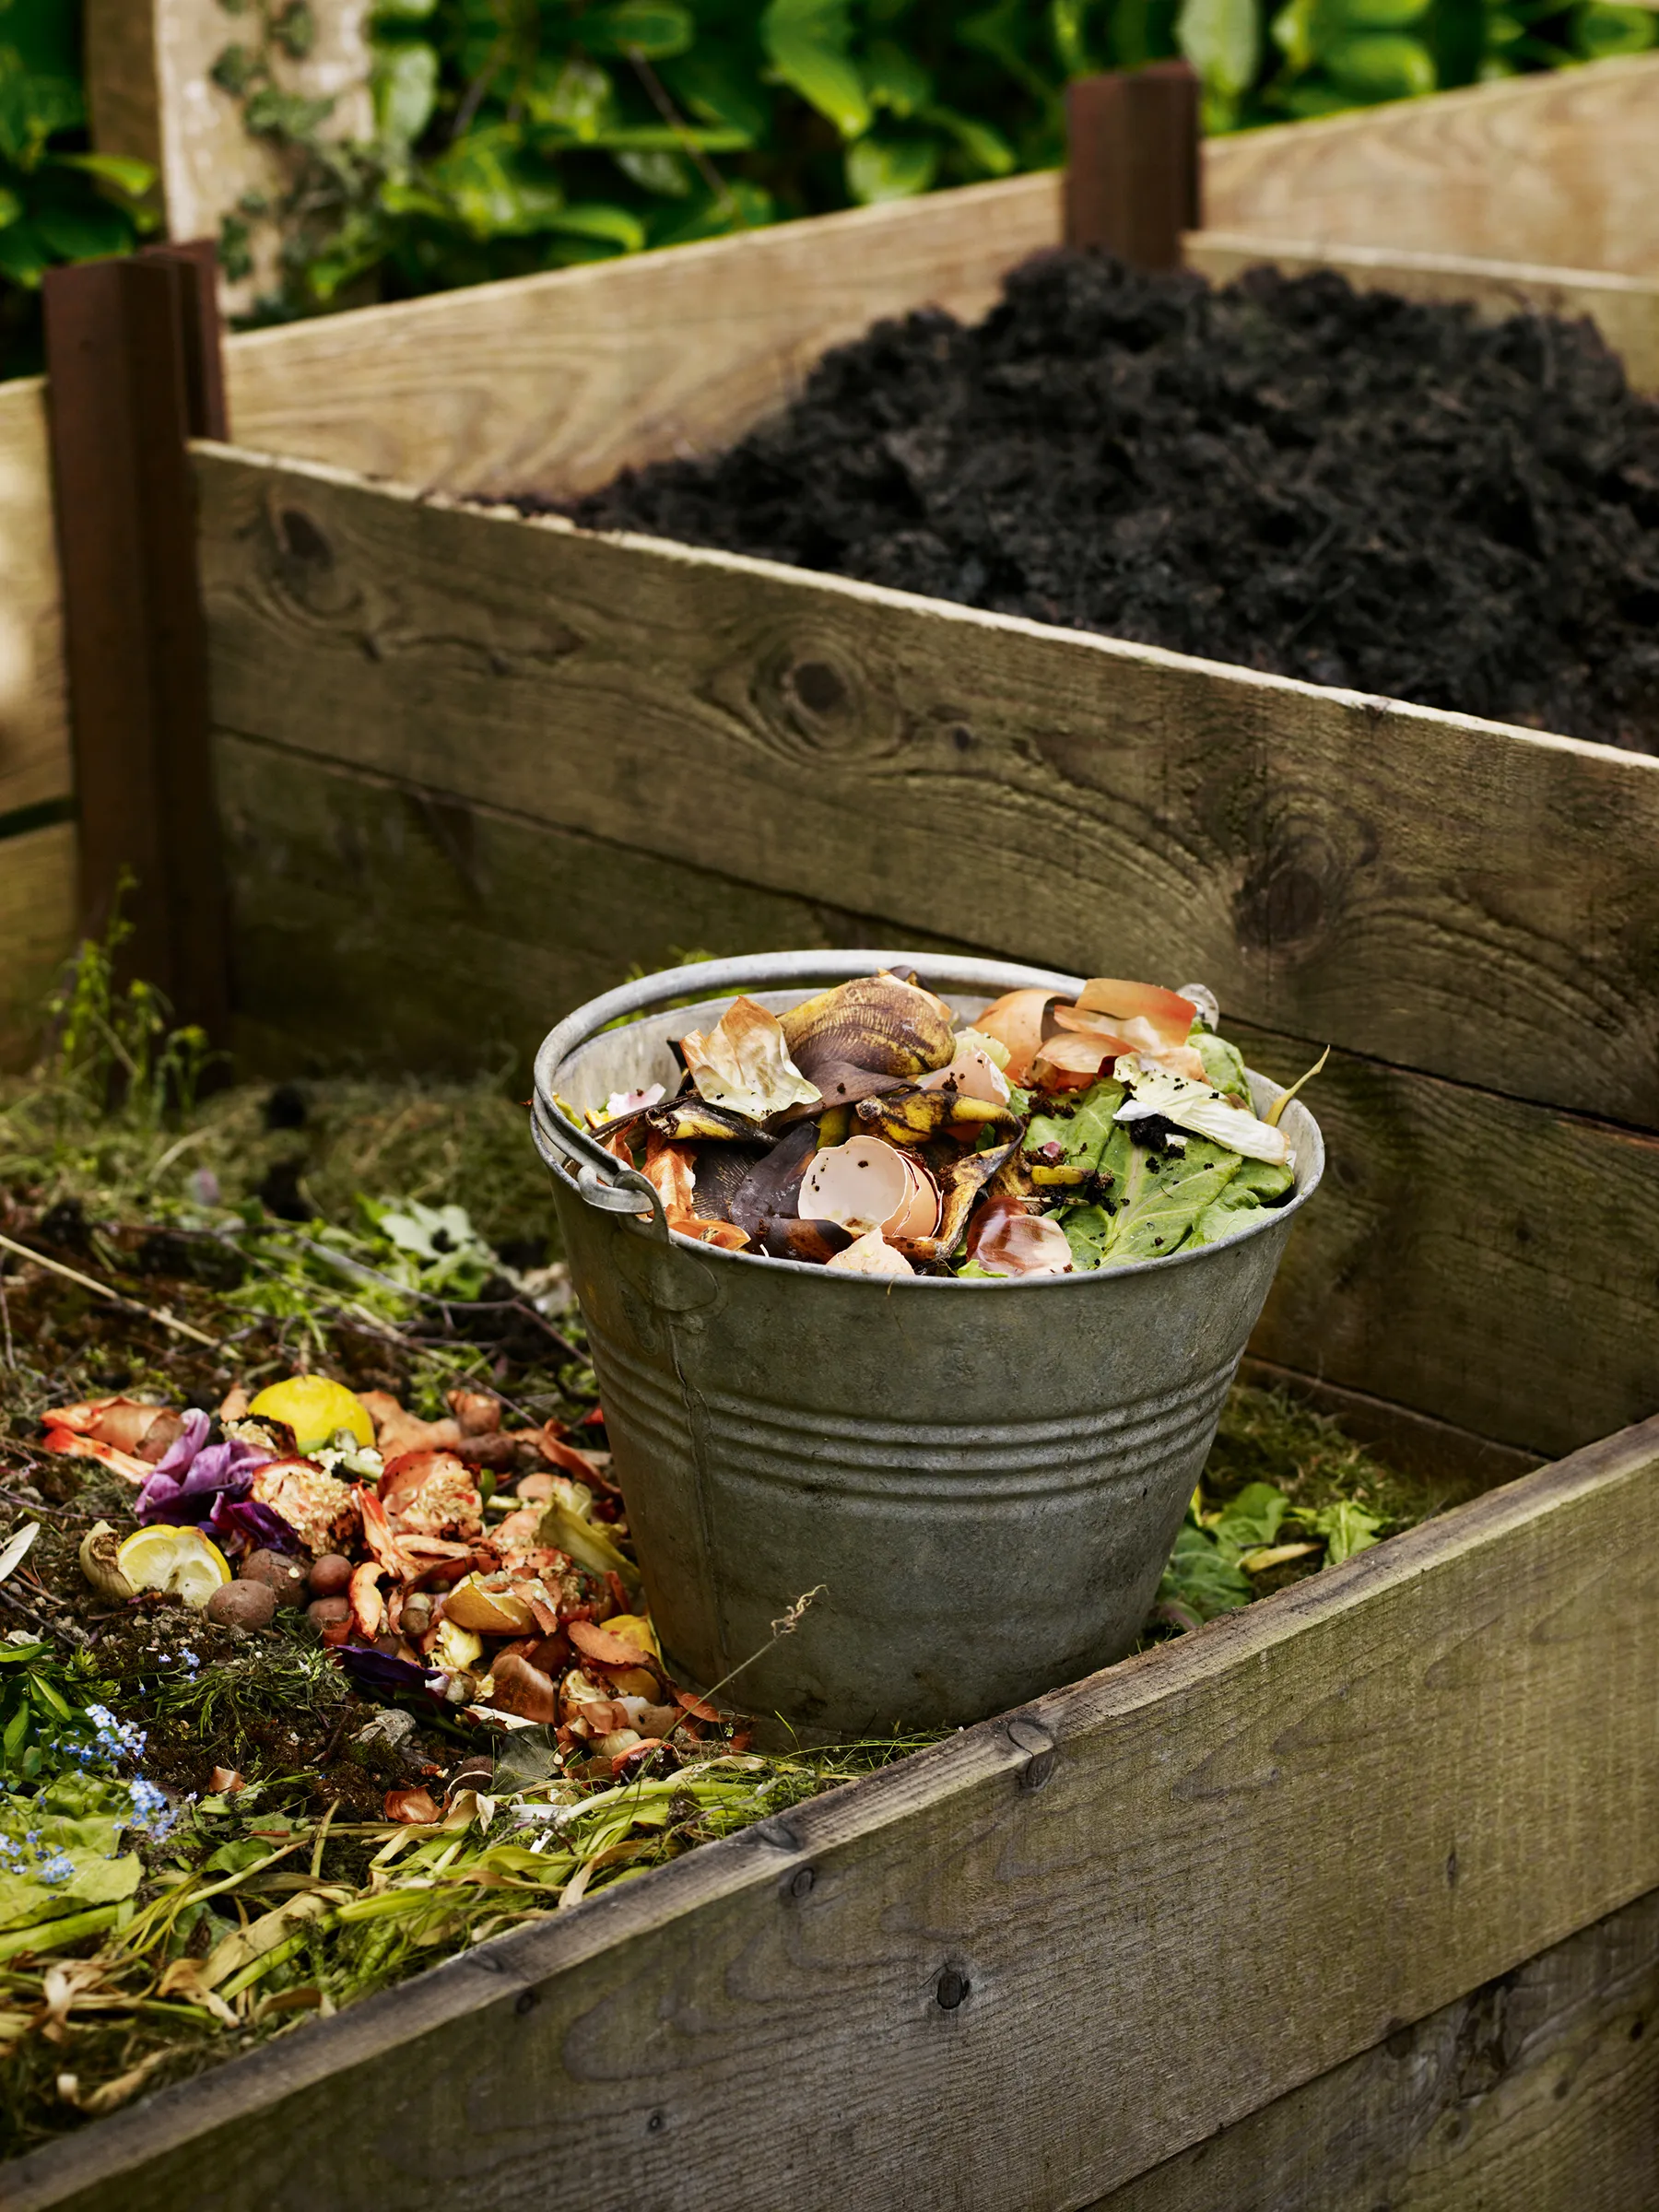 advantages of composting